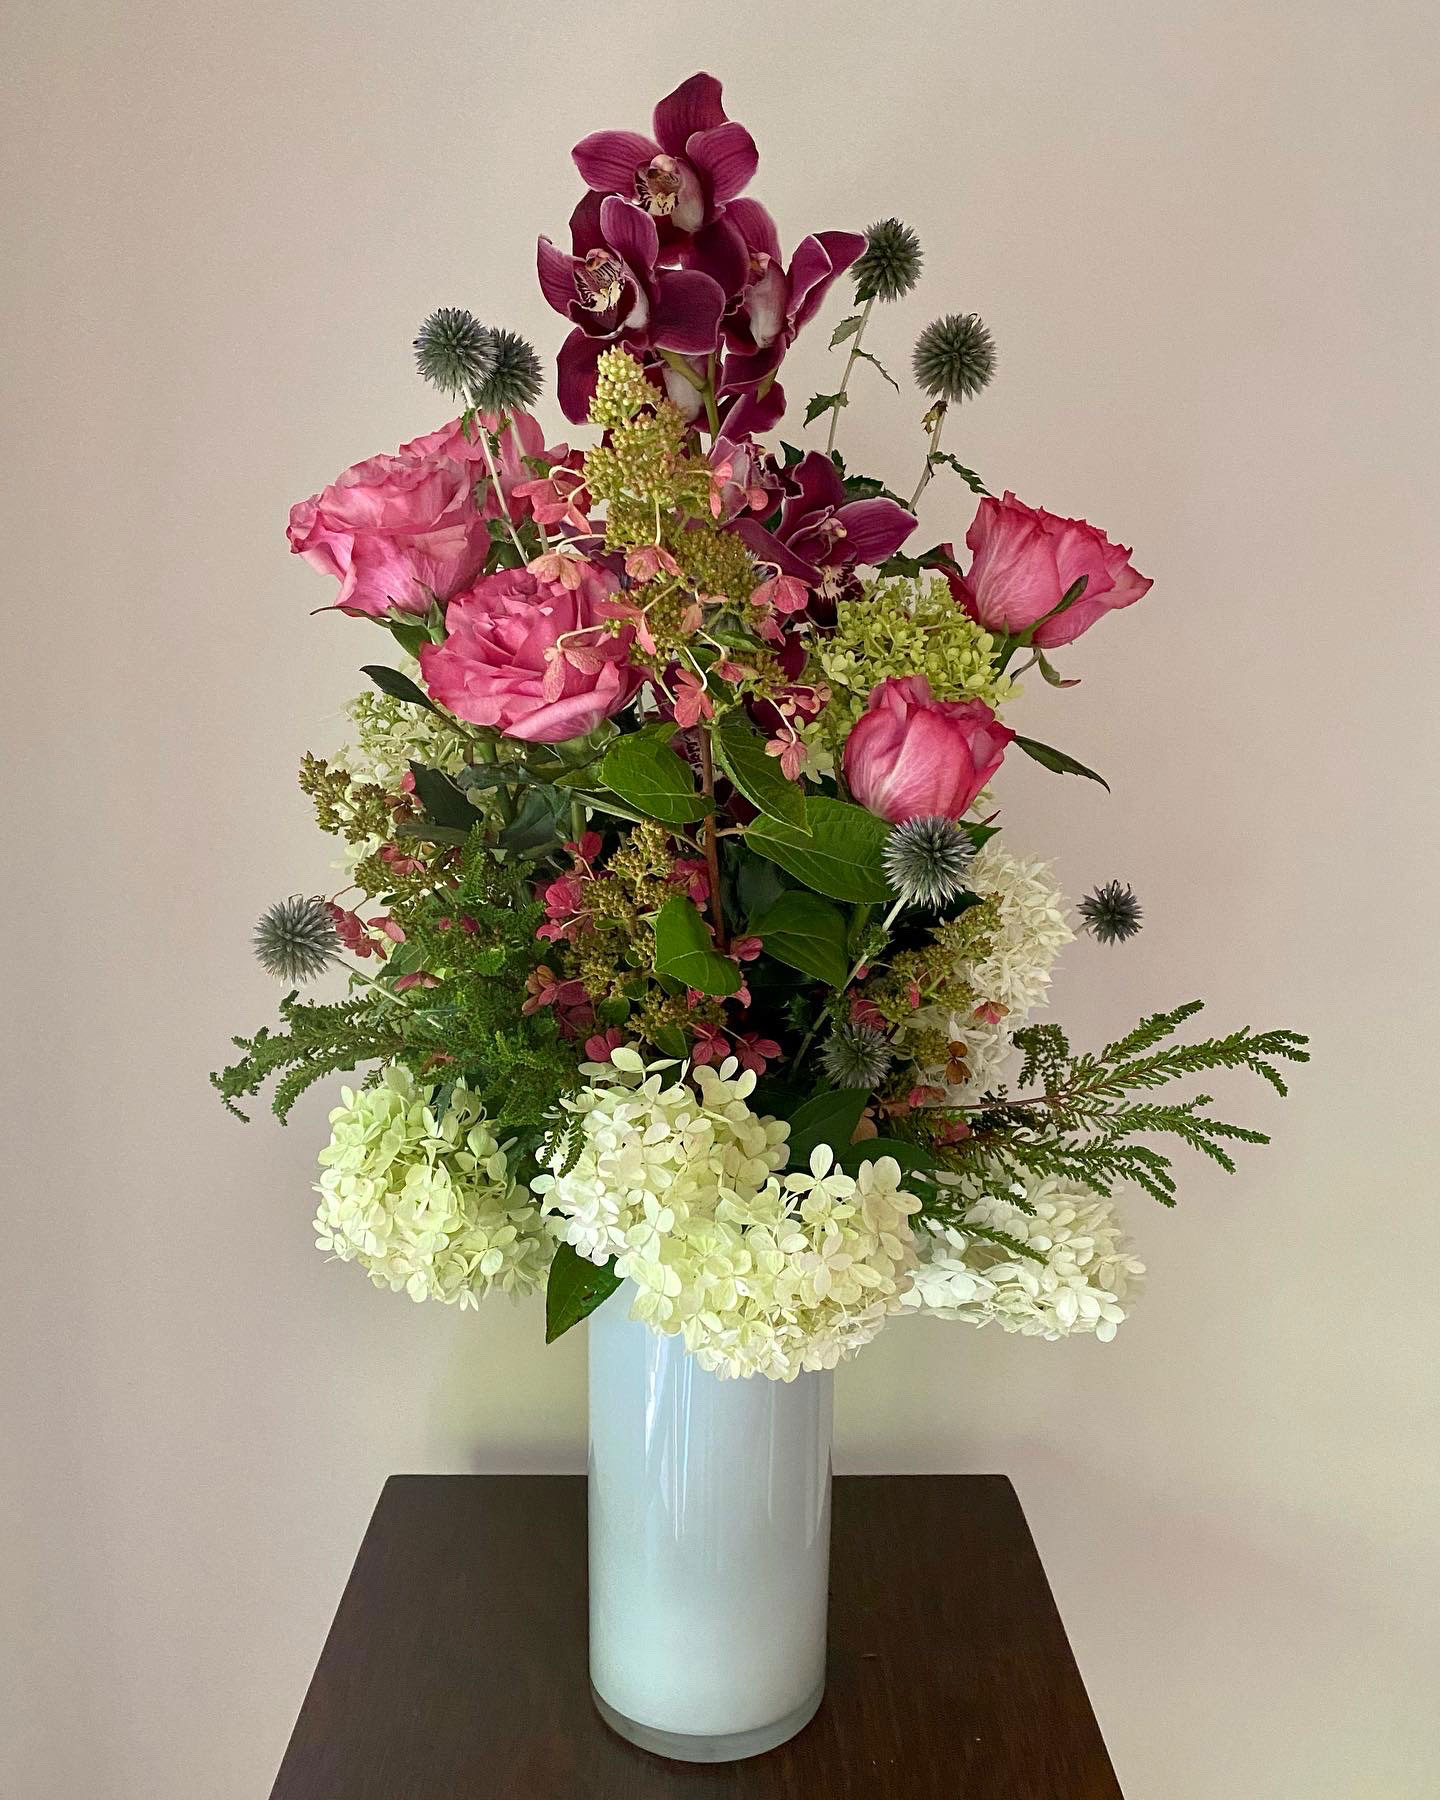 Queen-Elizabeth-Tribute-Flower-Design-vase